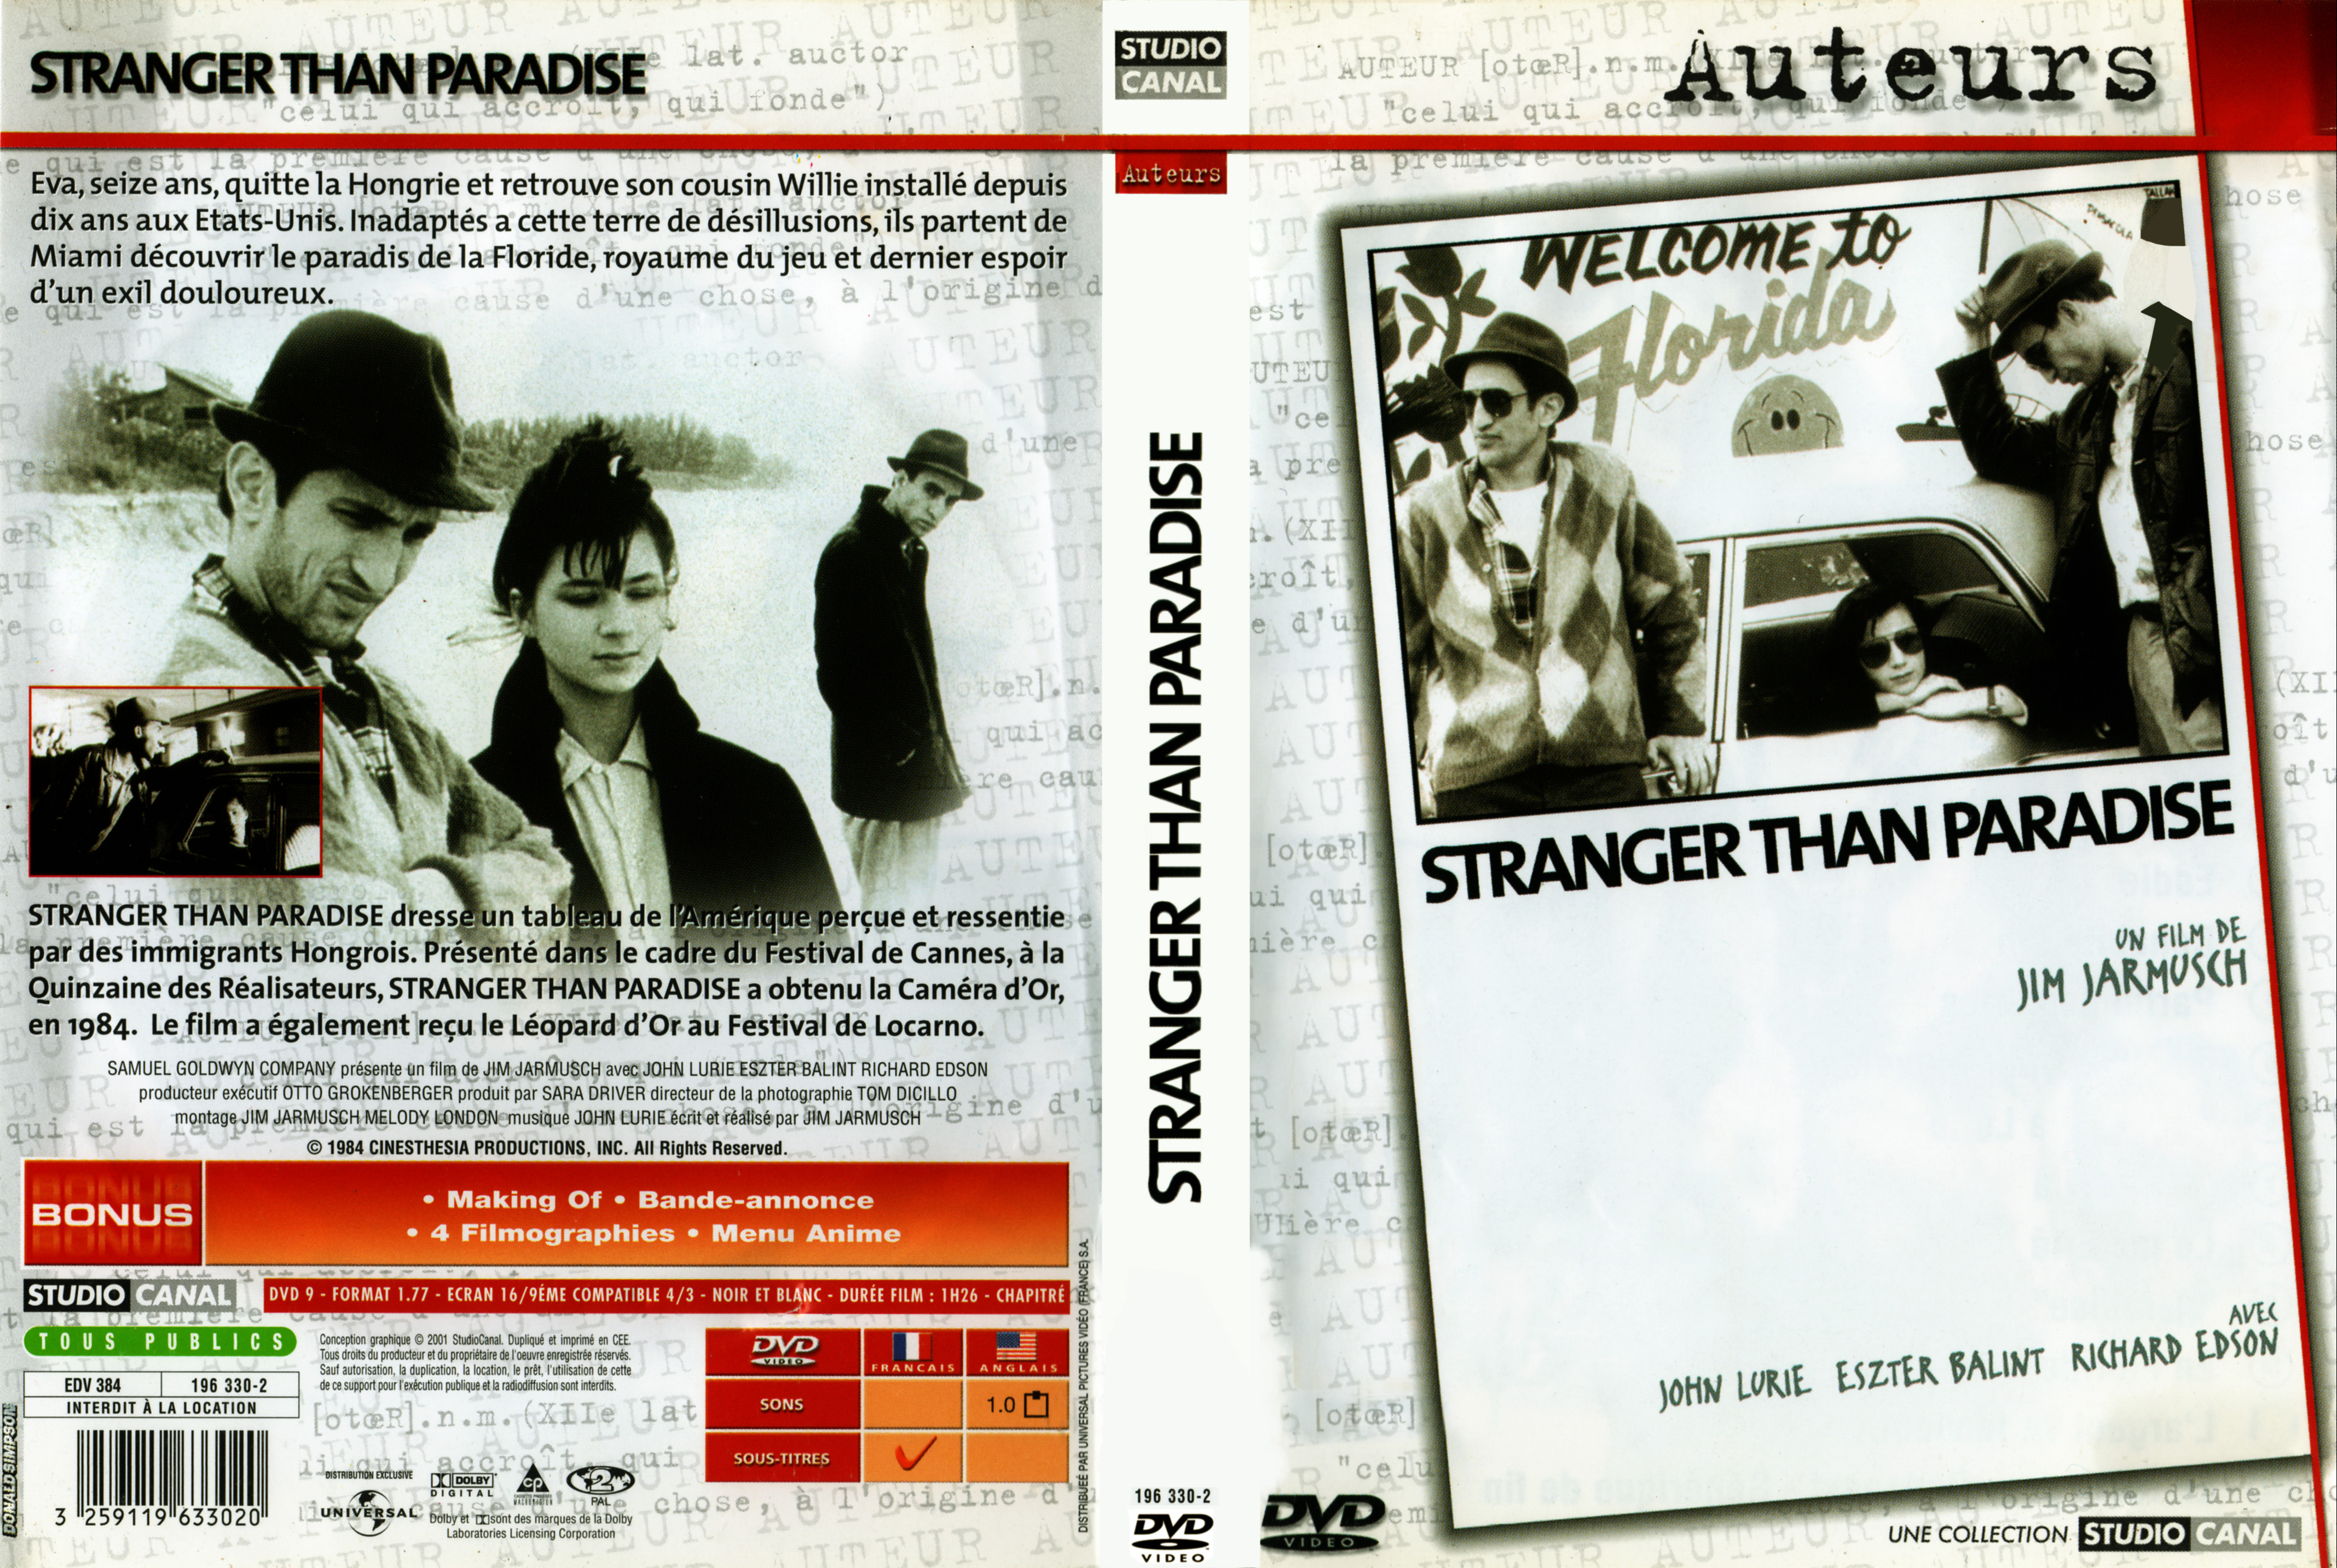 Jaquette DVD Stranger than paradise